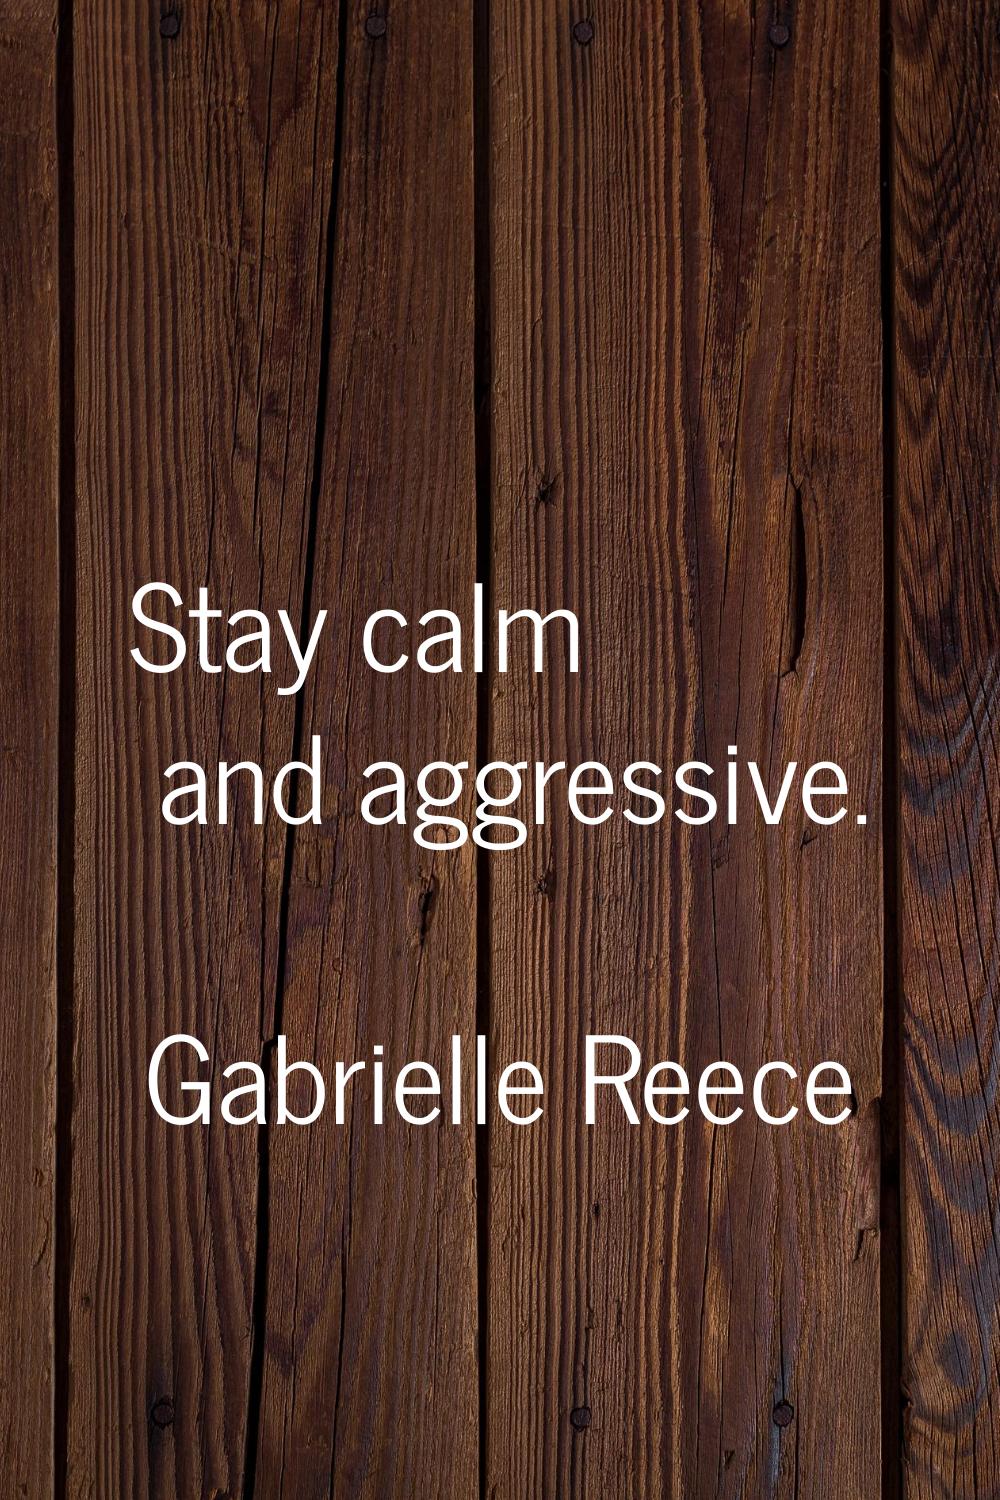 Stay calm and aggressive.